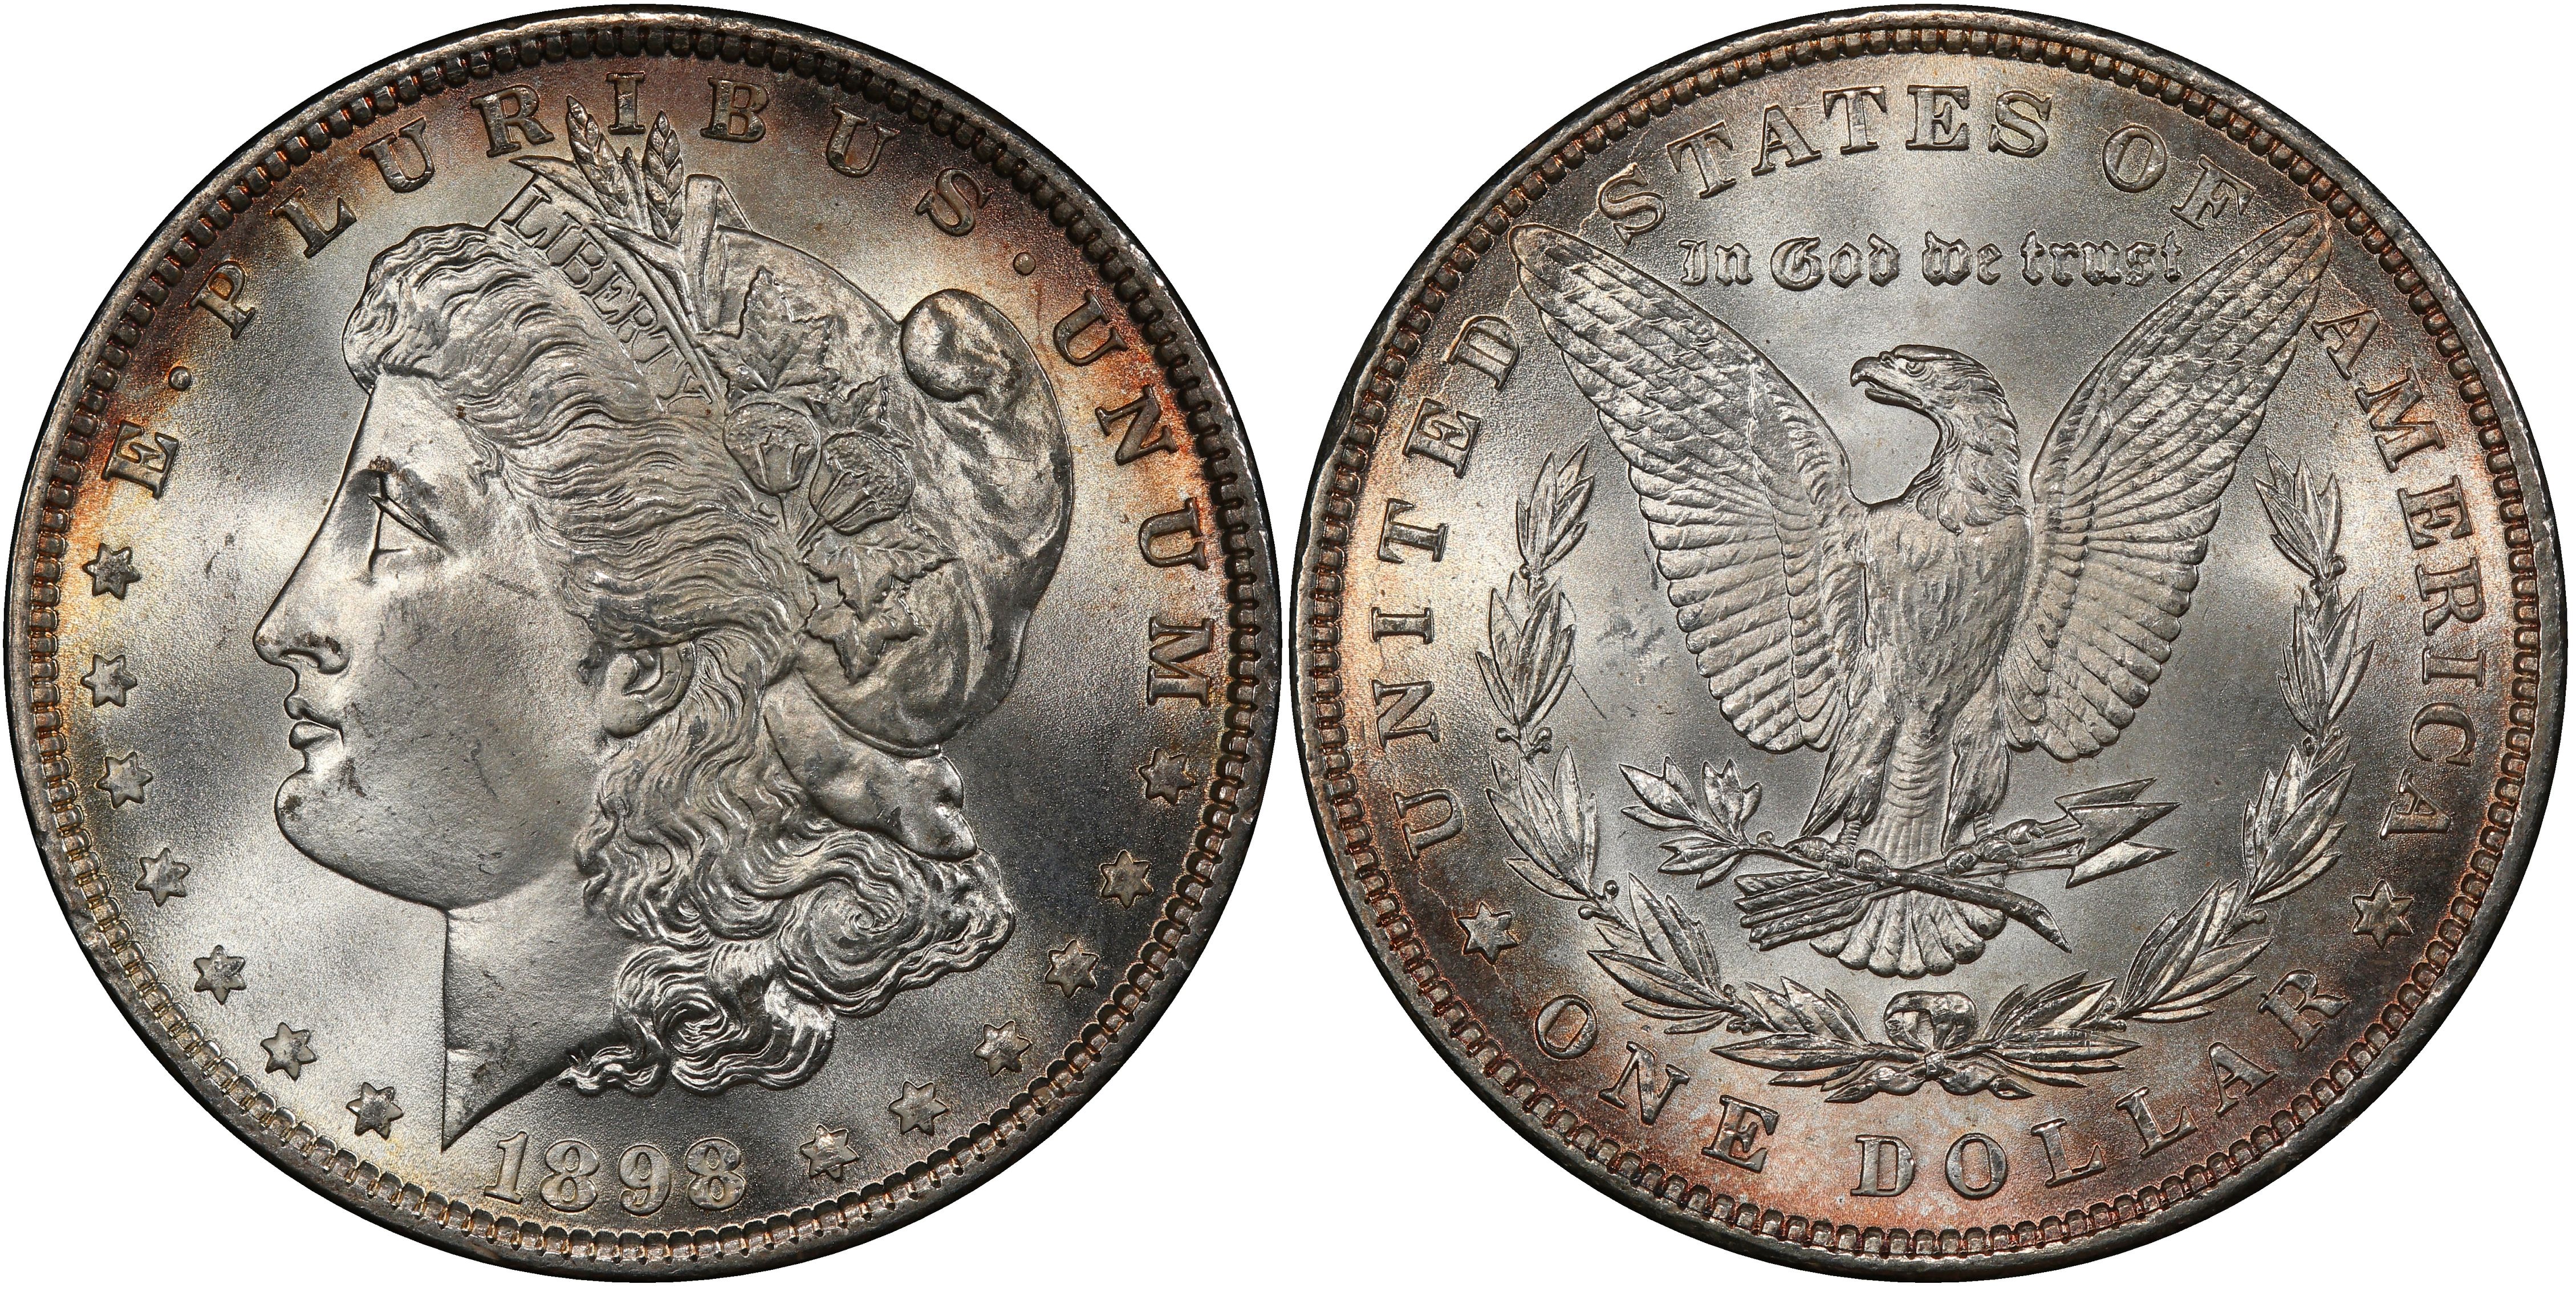 1898 $1 (Regular Strike) Morgan Dollar - PCGS CoinFacts